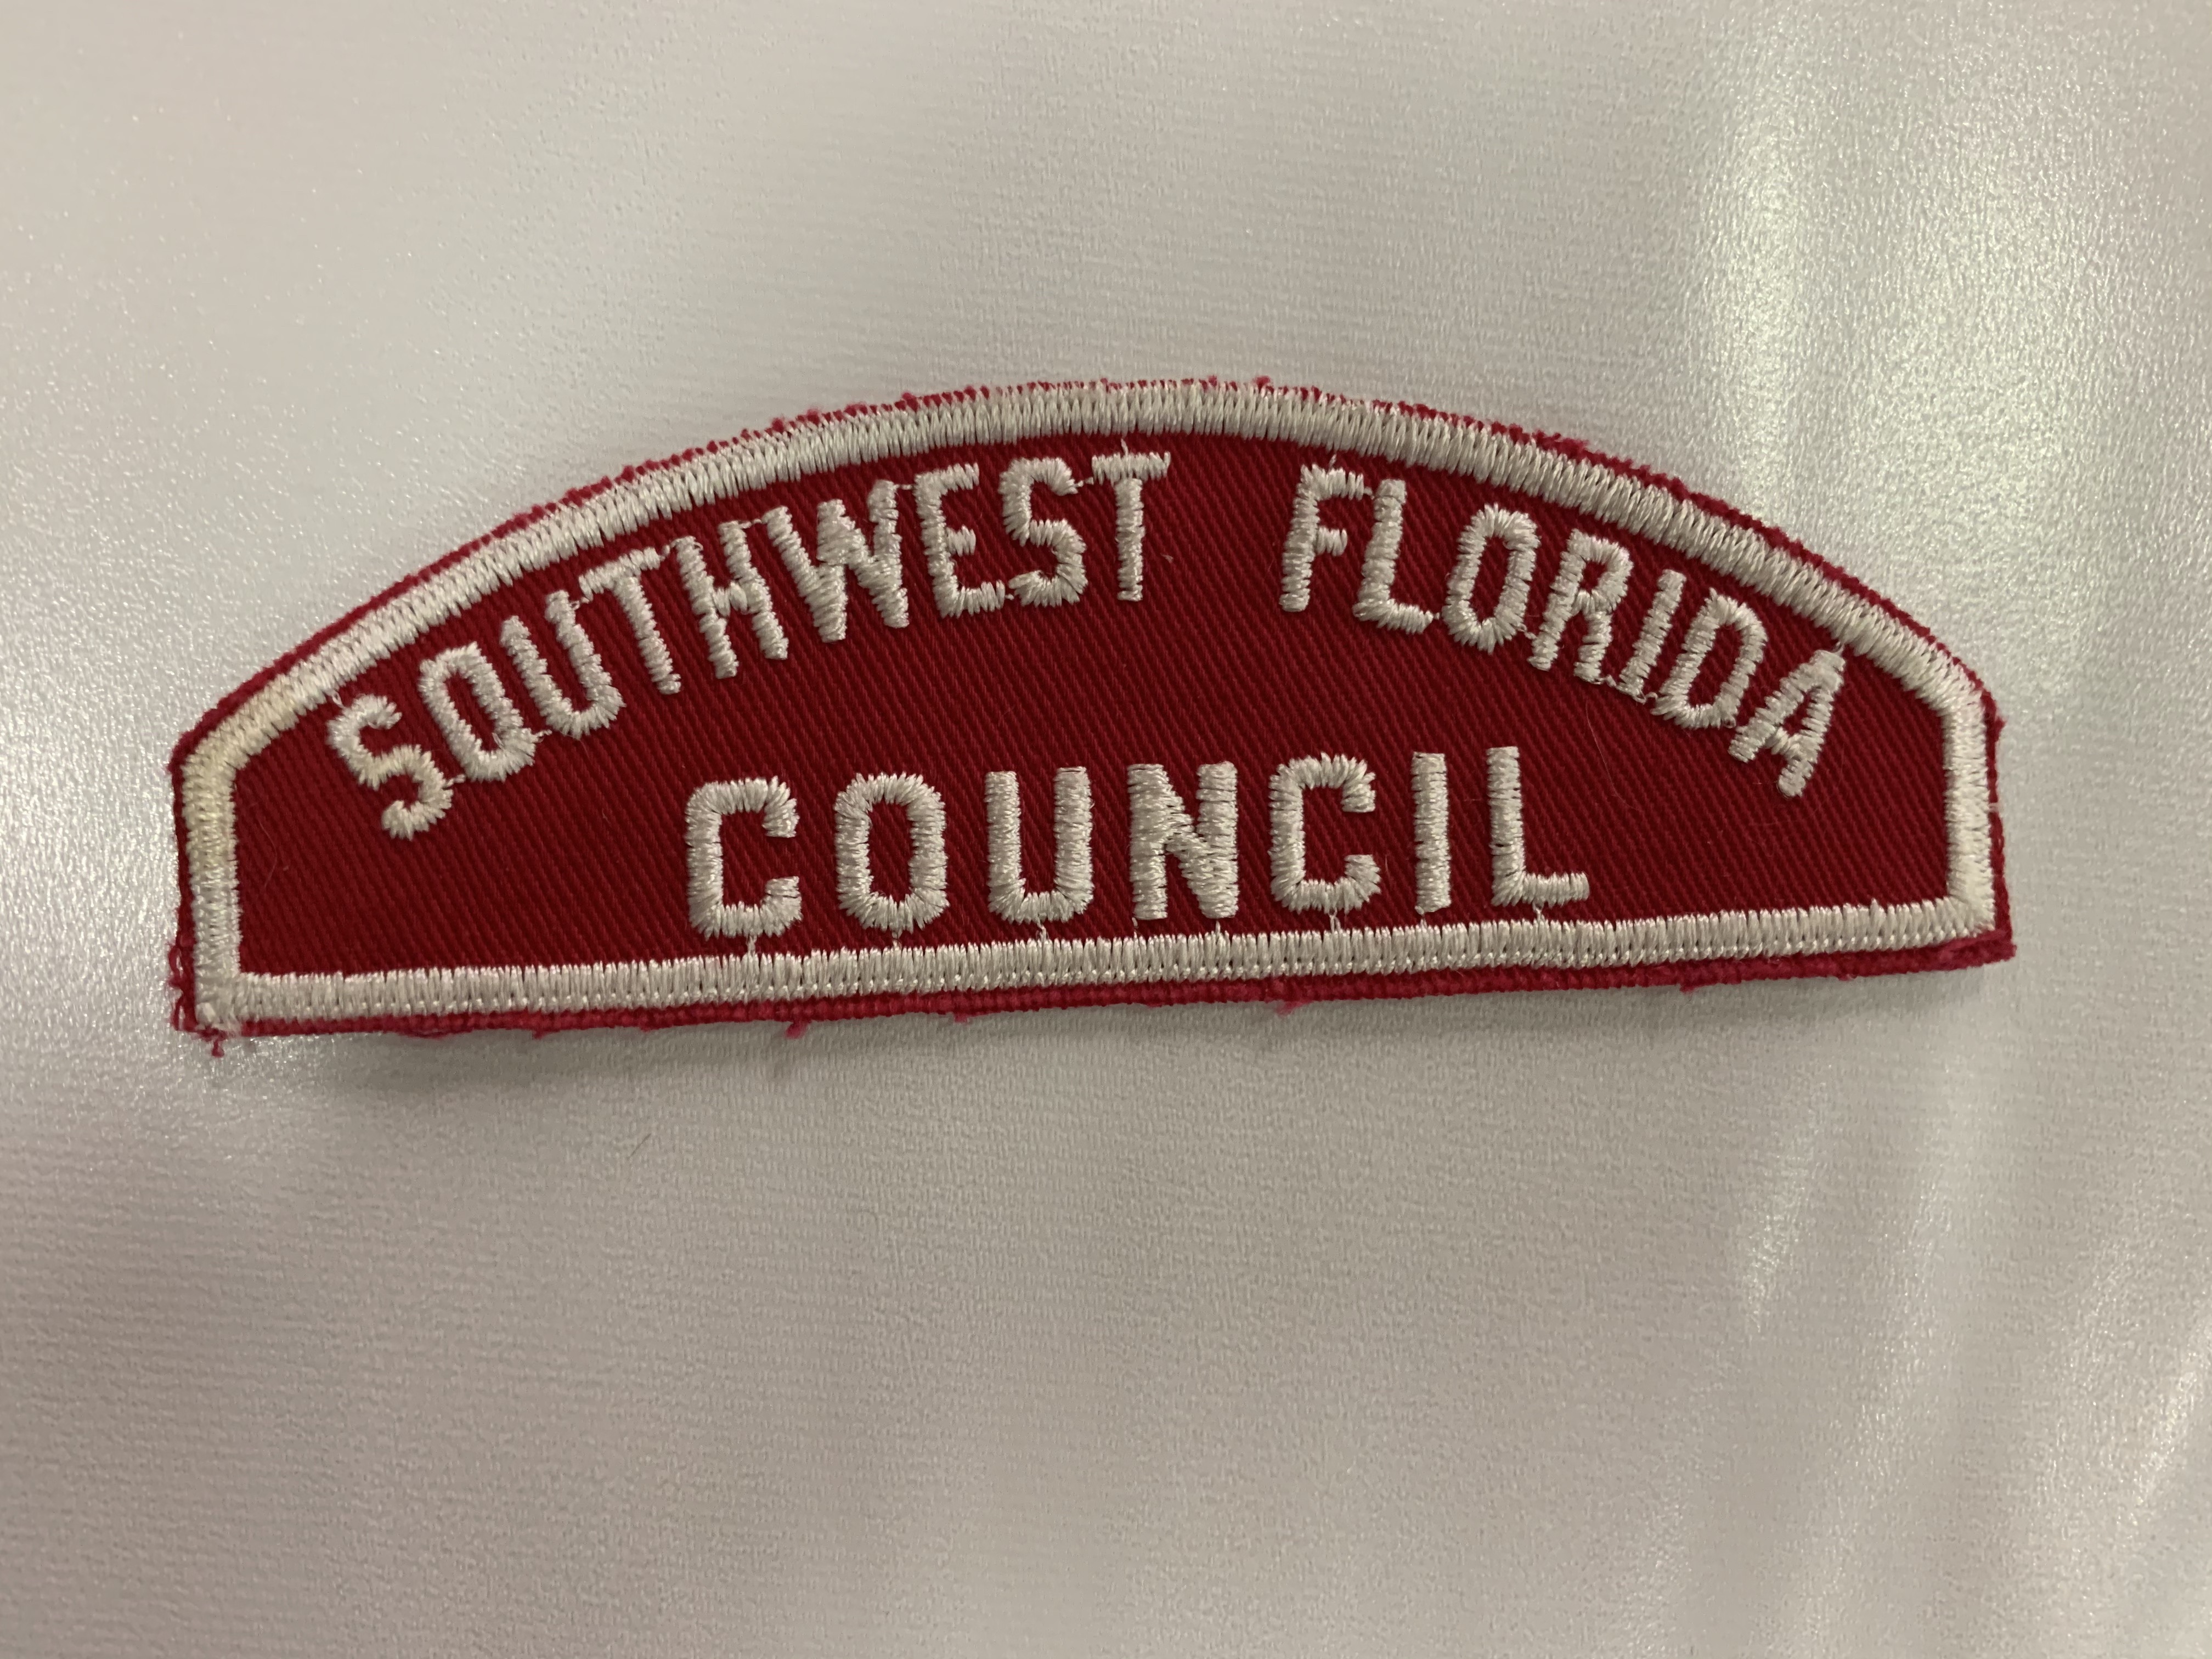 Southwest Floirda R&W Council CSP